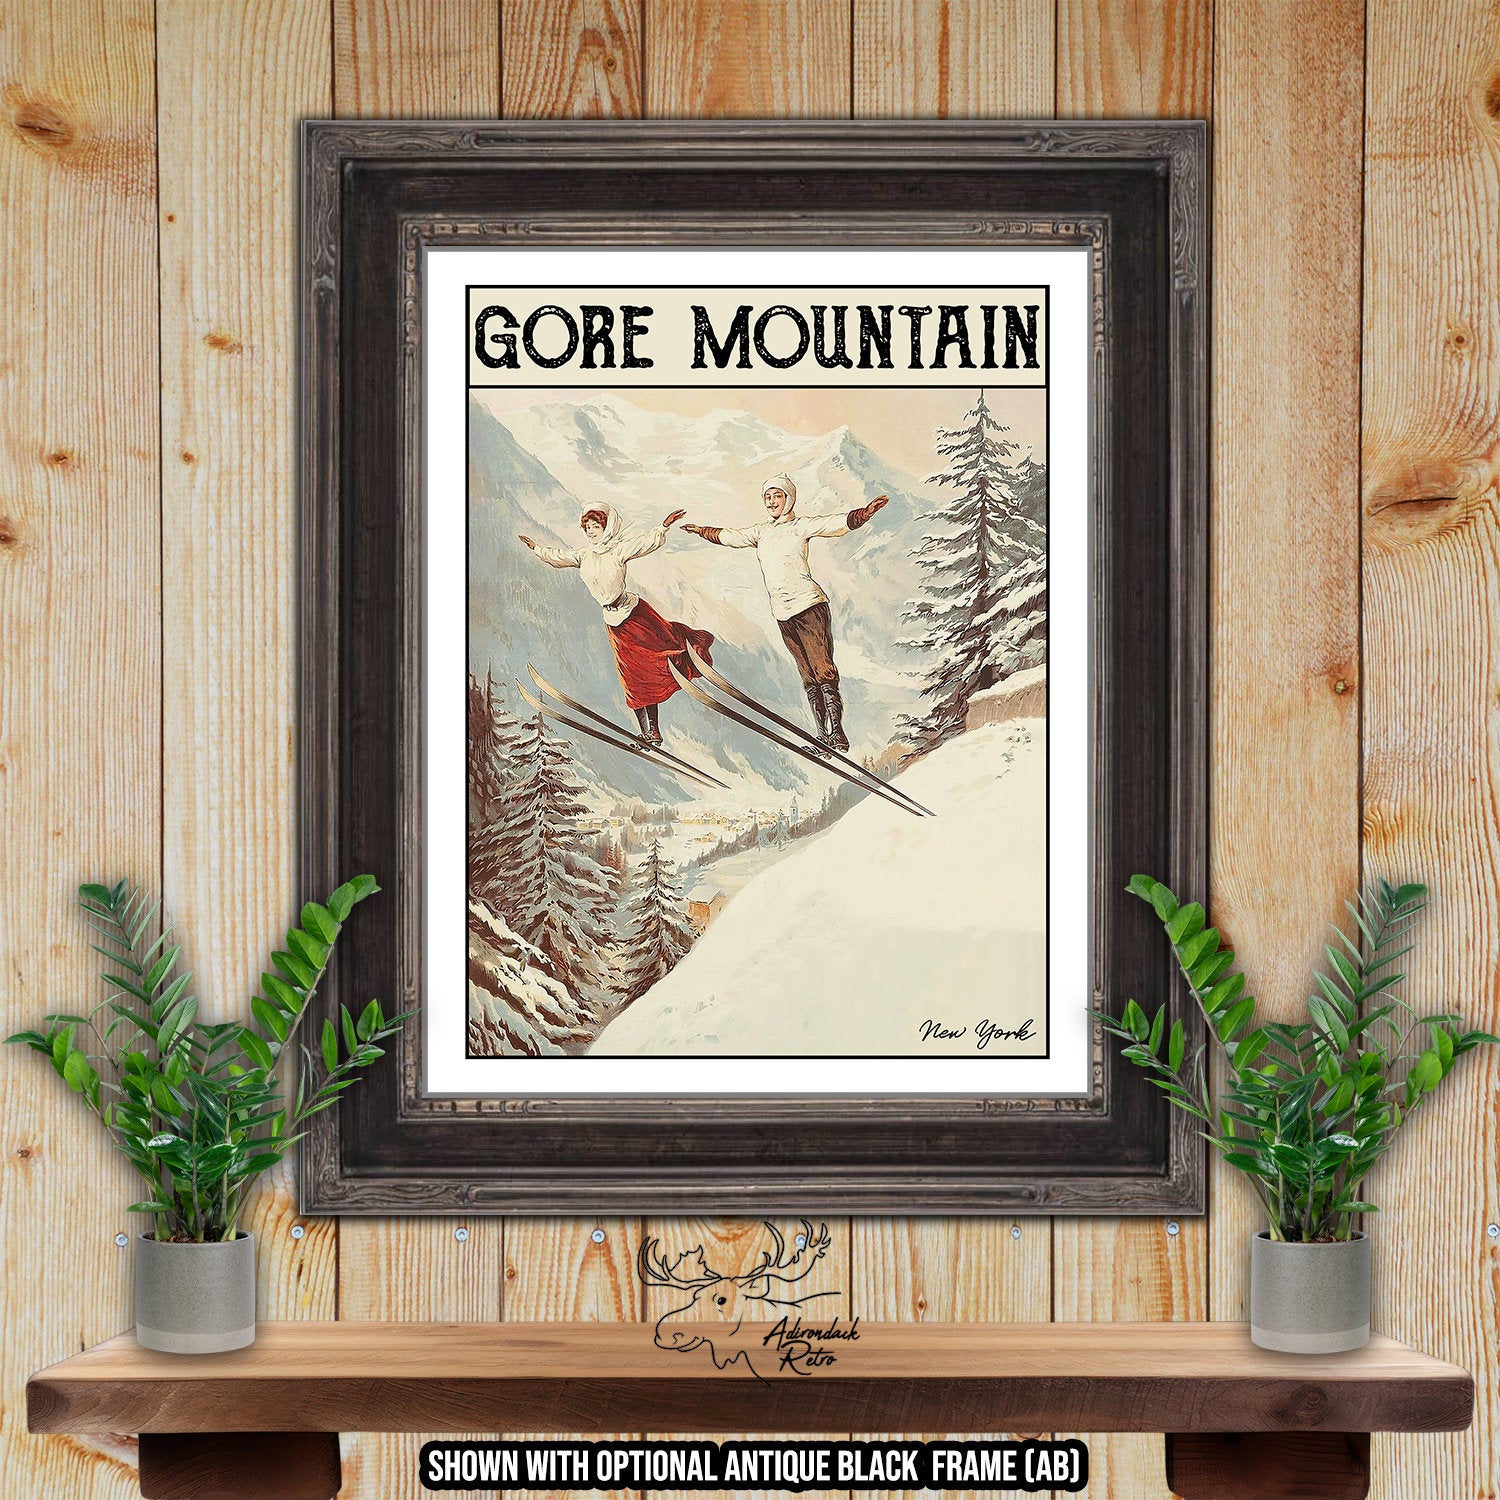 Gore Mountain New York Retro Ski Resort Art Print at Adirondack Retro